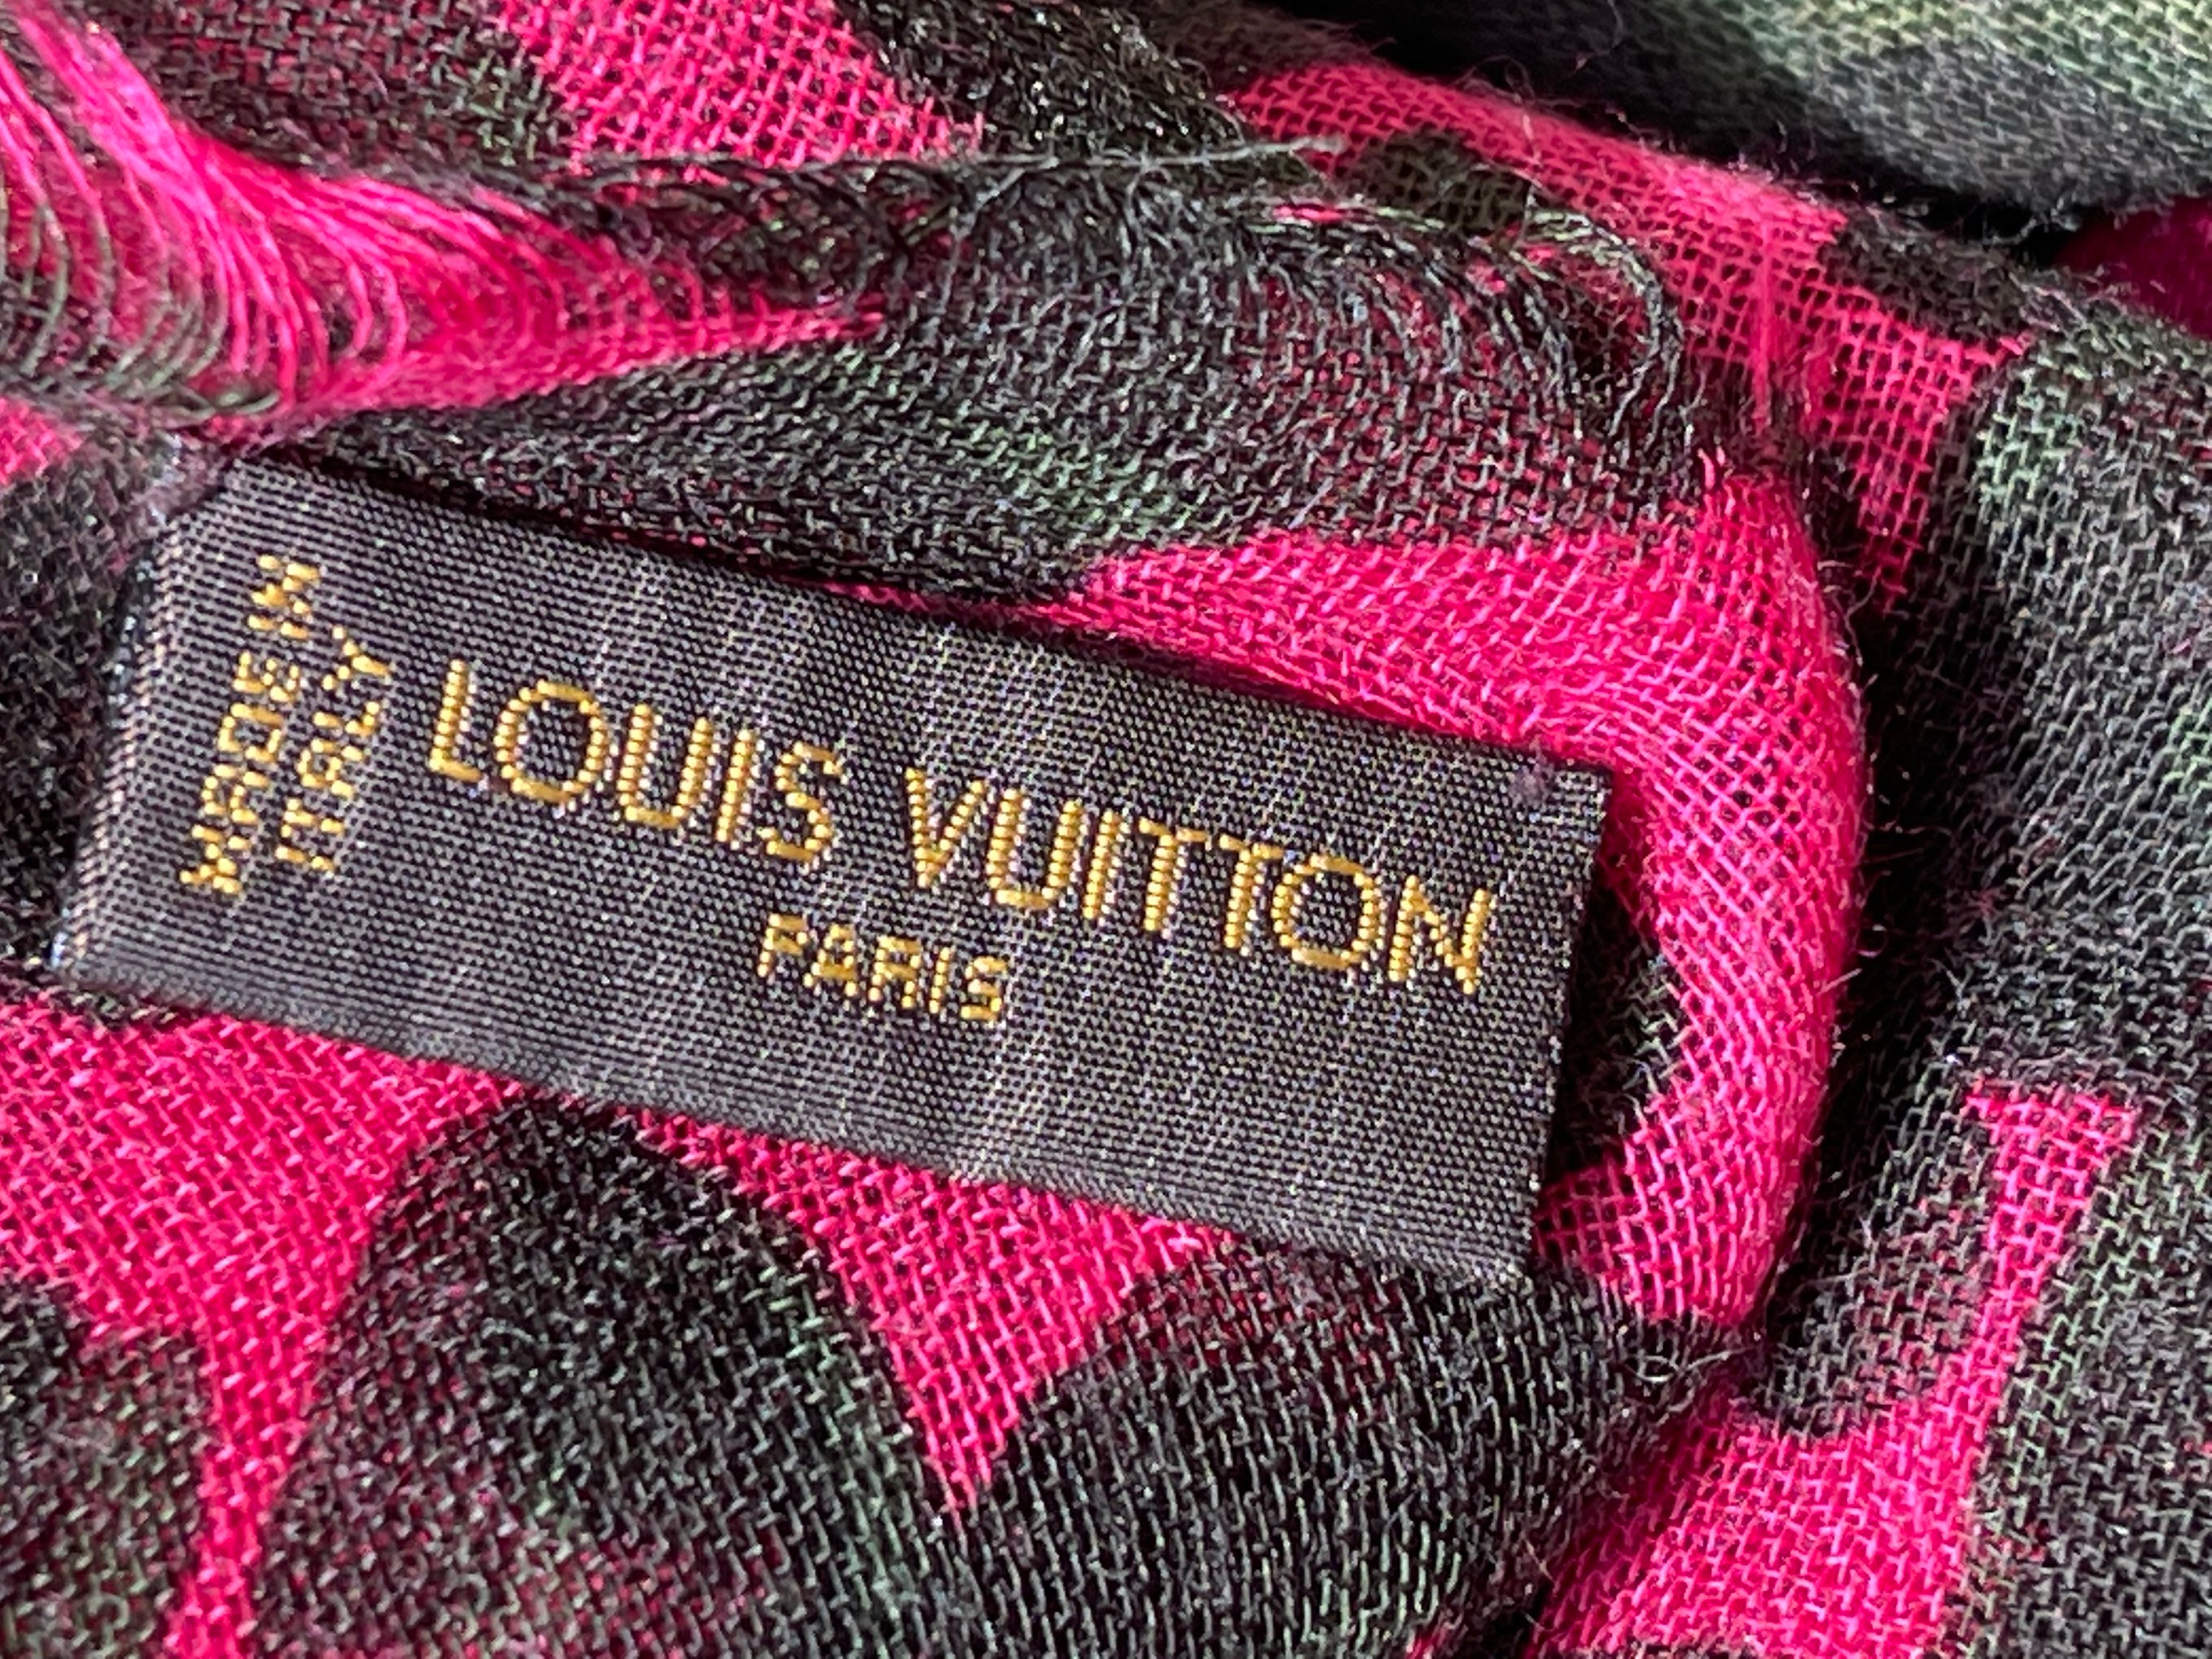 Louis Vuitton Monogram 70% Cashmere and 30% Silk Beanie